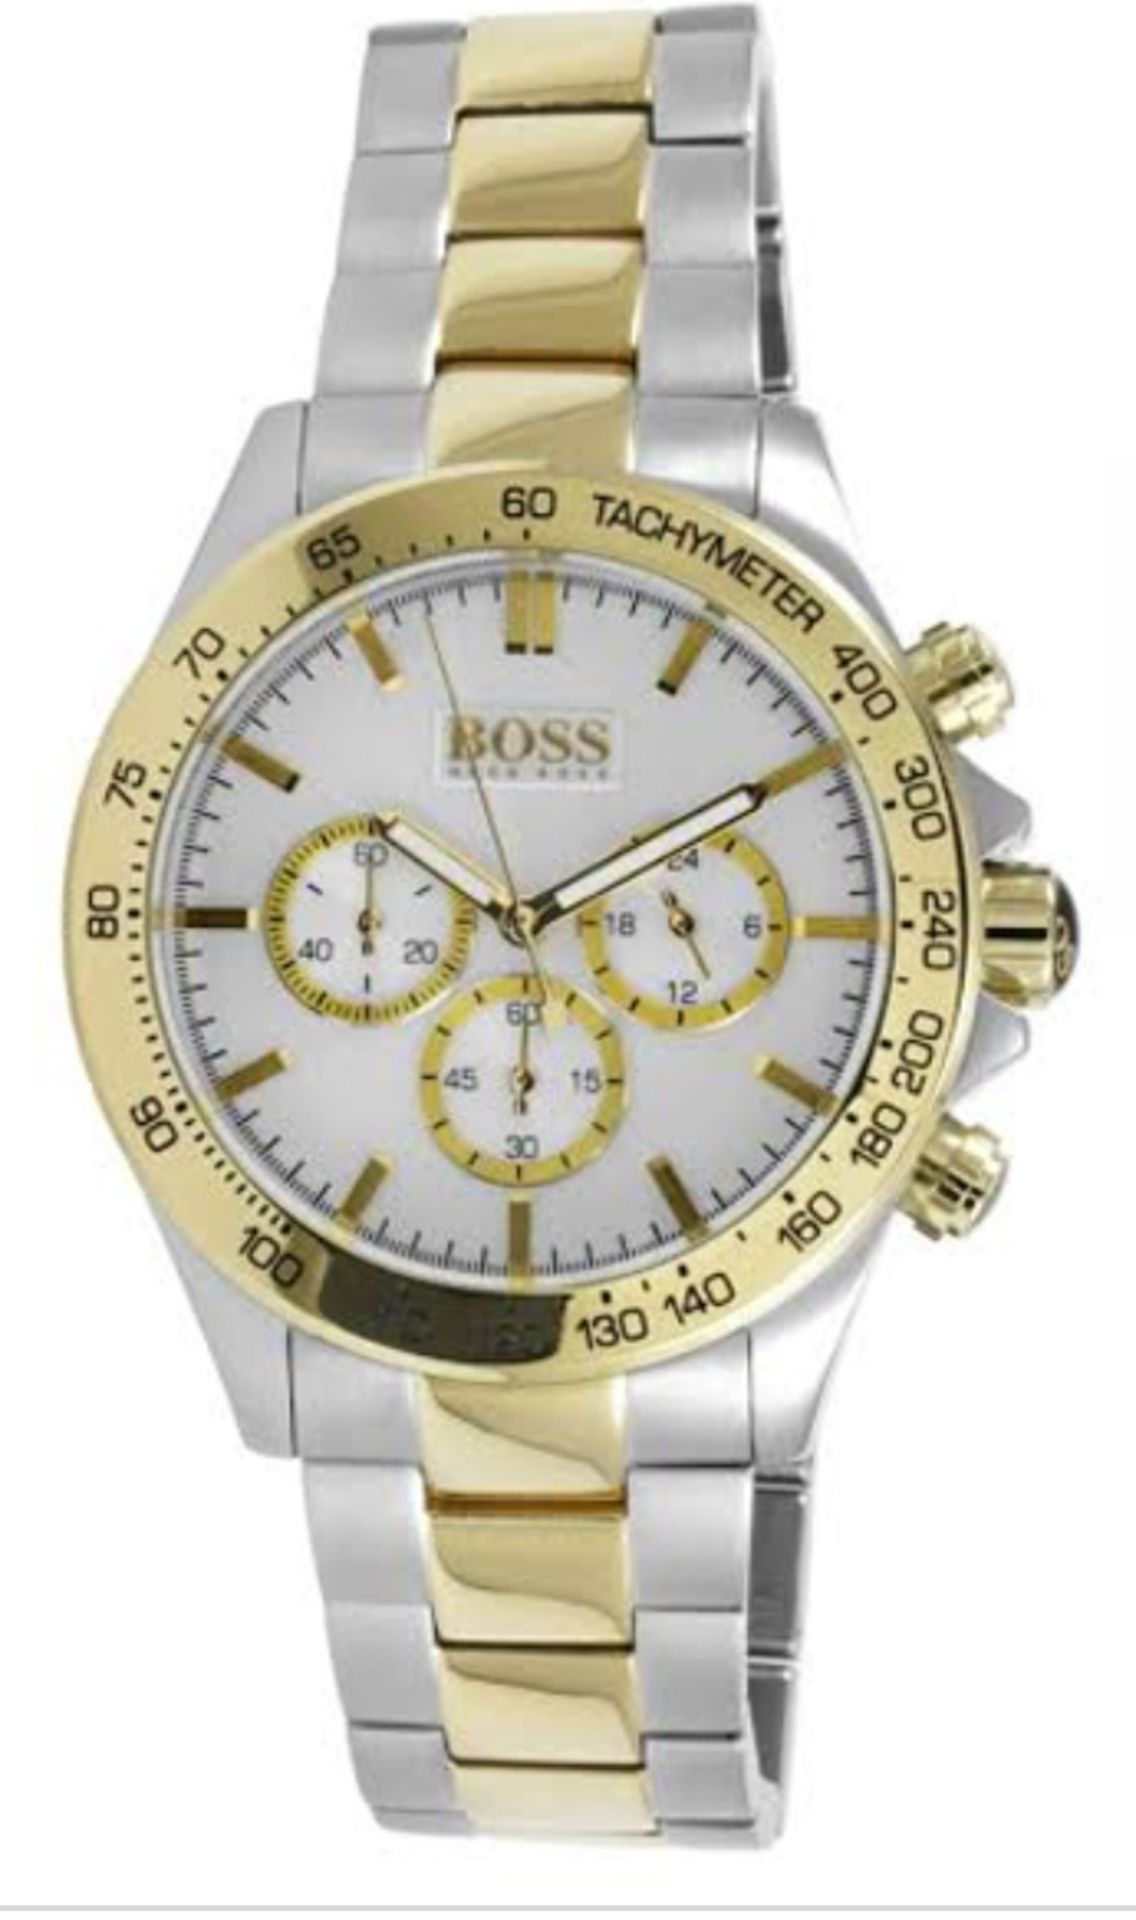 Hugo Boss 1512960 Men's Ikon Two Tone Gold & Silver Bracelet Chronograph Watch - Image 2 of 10